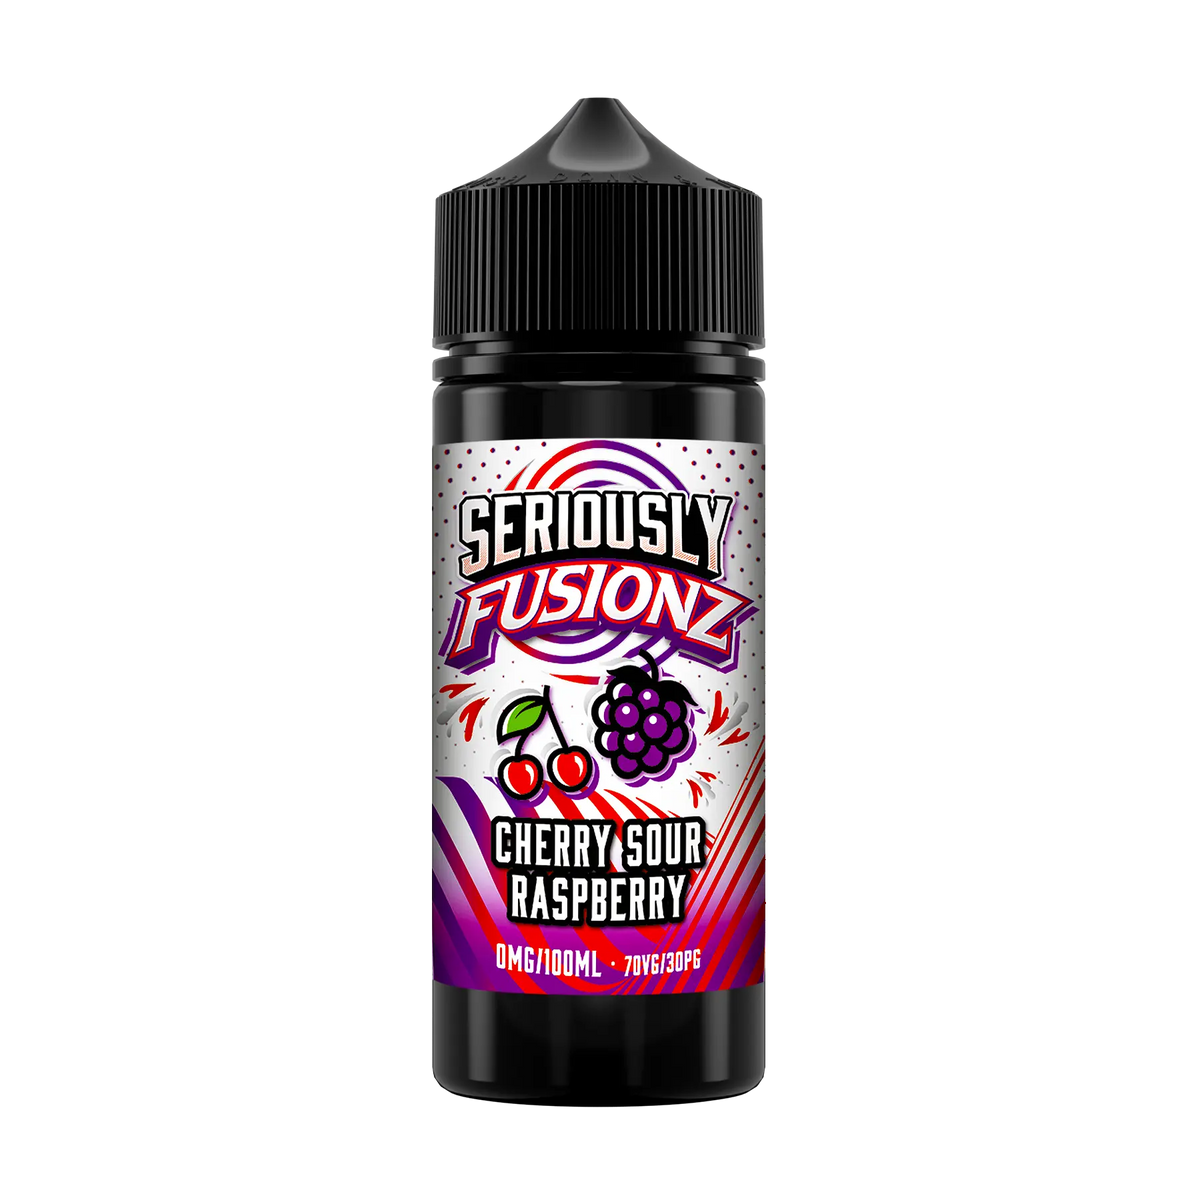 Doozy Seriously Fusionz Cherry Sour Raspberry 100ml E Liquid Shortfill